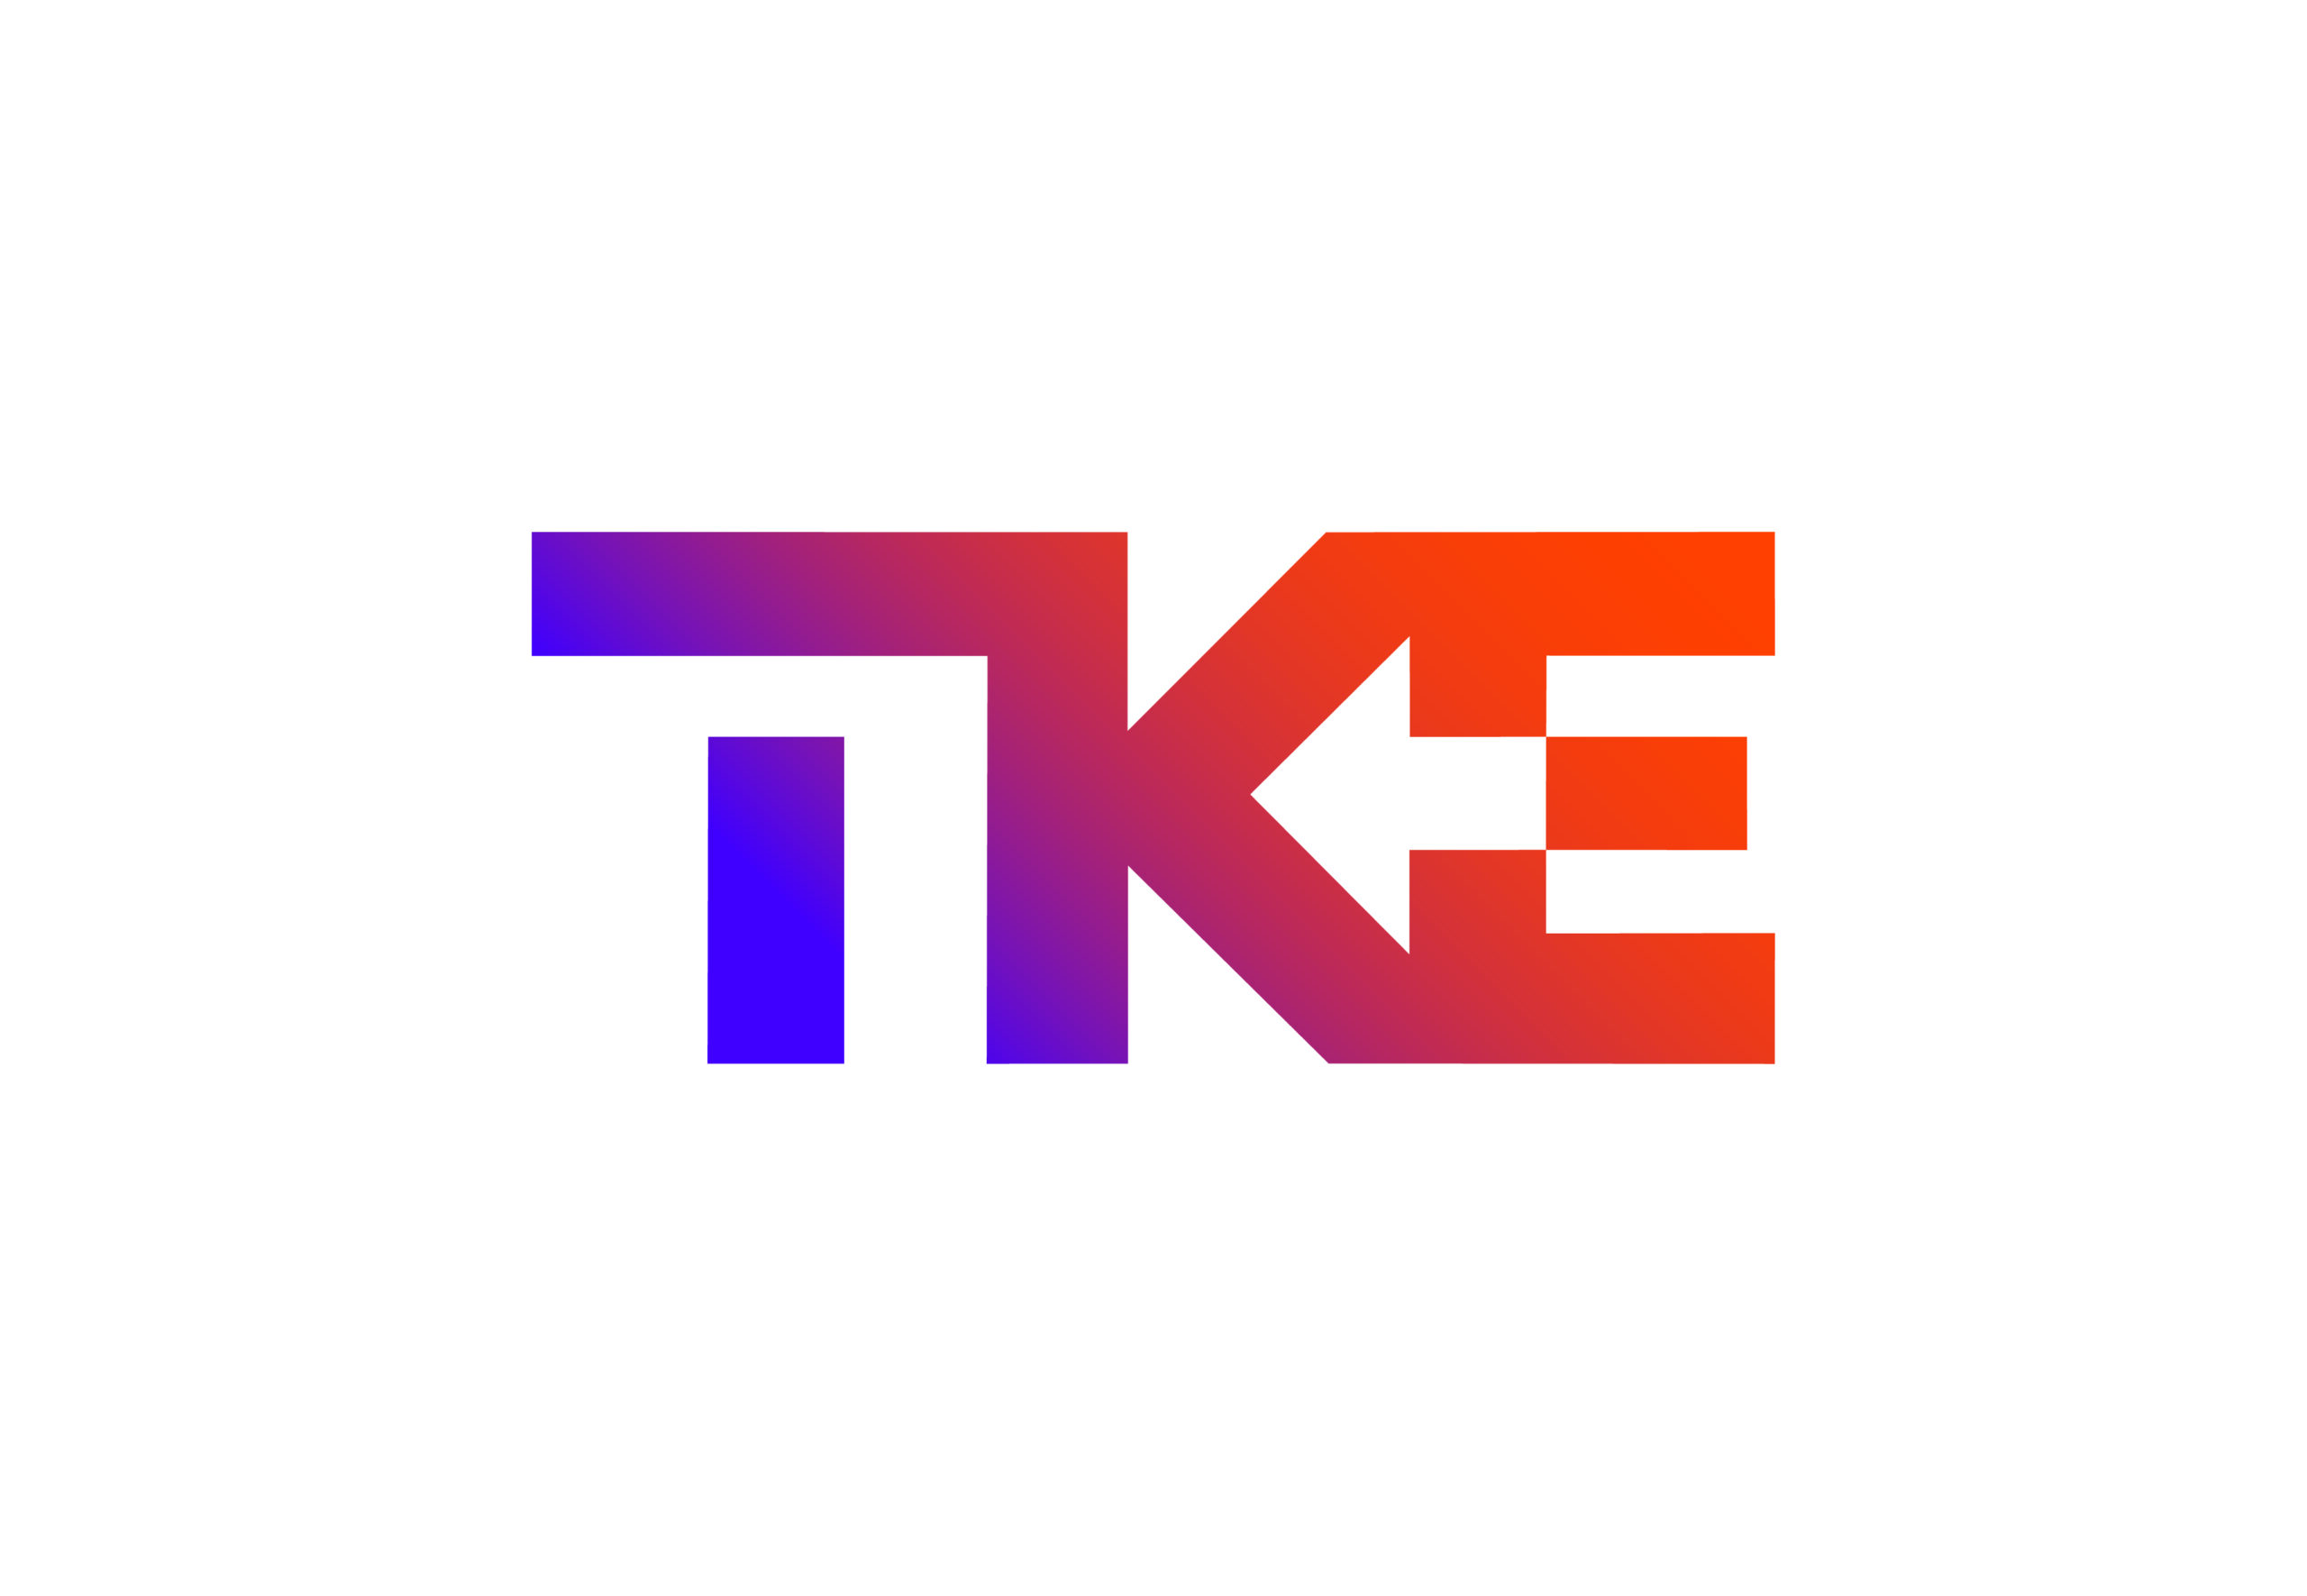 New TKE logo